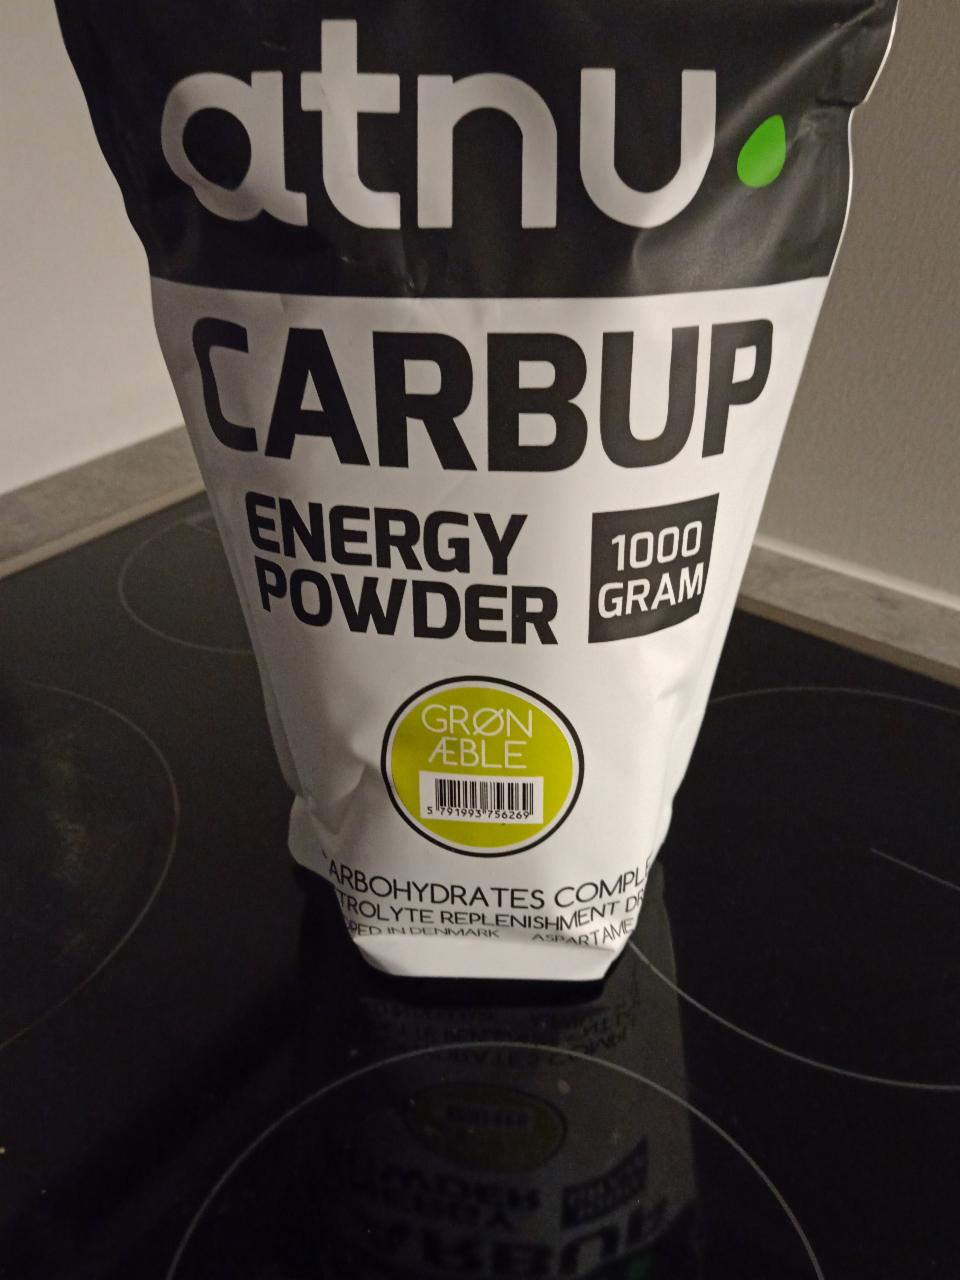 Fotografie - Carbup energy Power green apple atnu